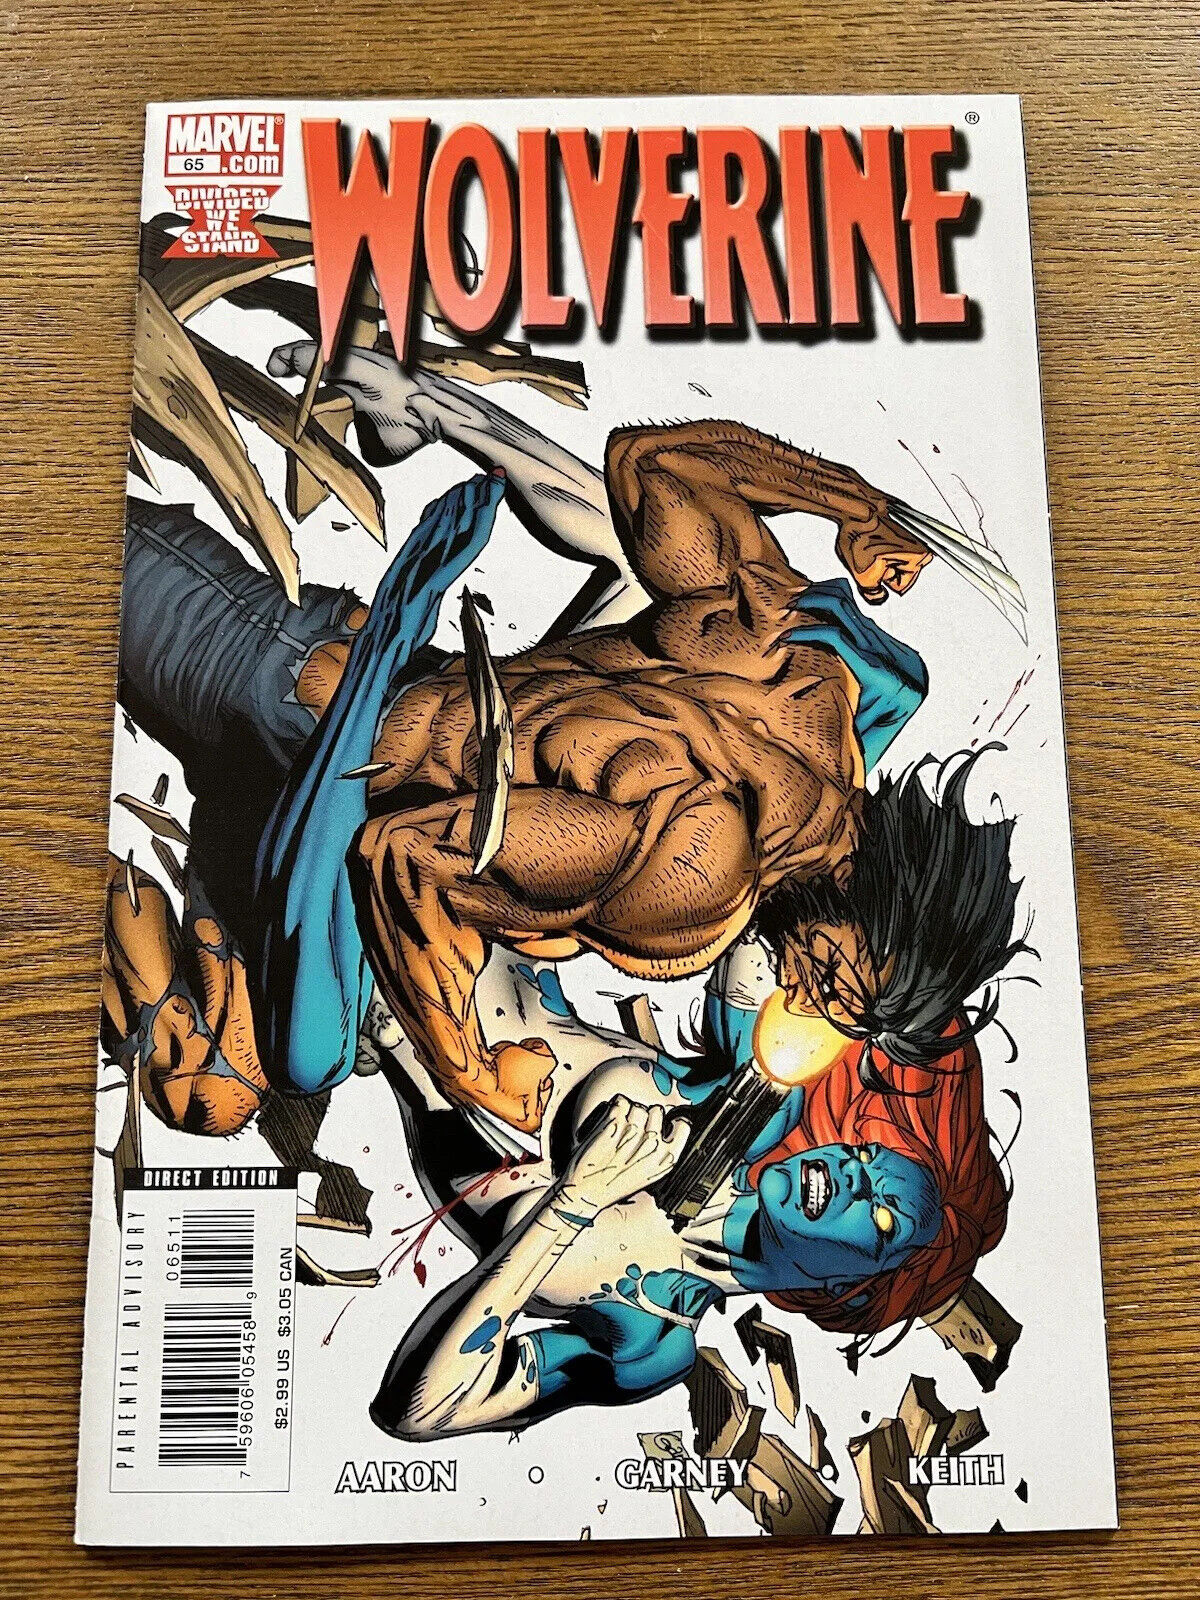 Wolverine #65/Good Copy